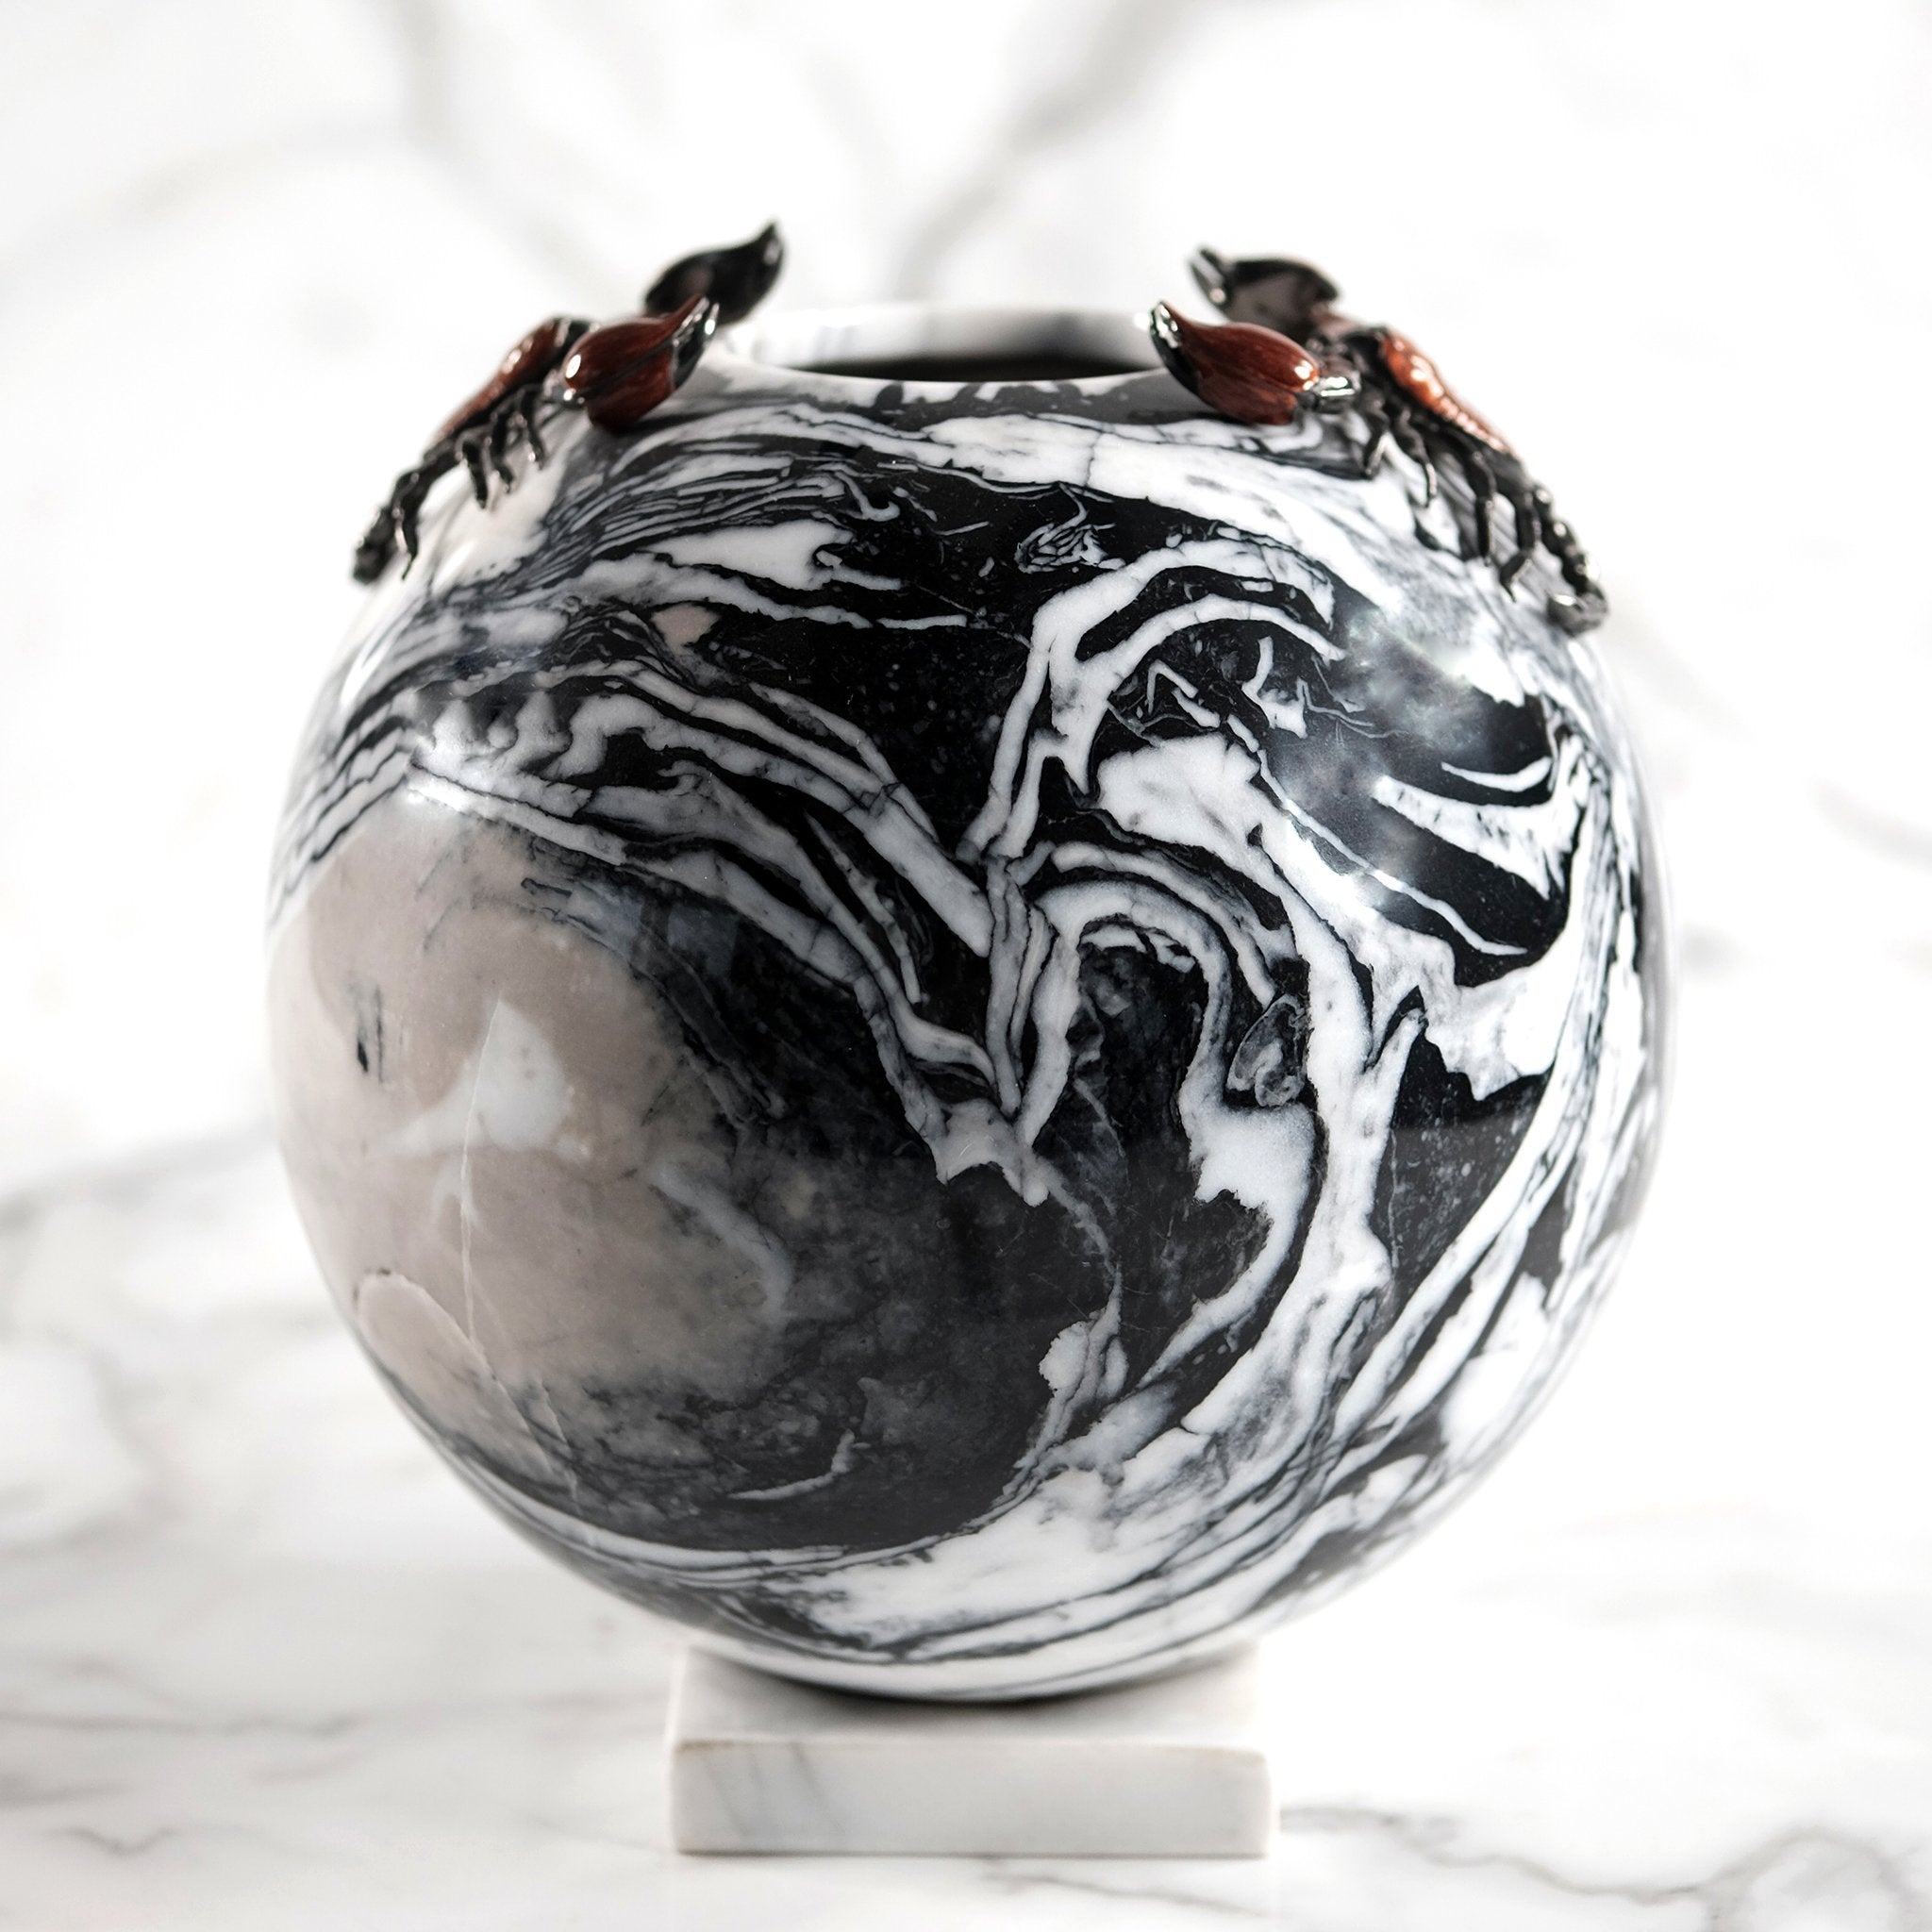 Mottled Black & White Turned Marble Vase, with Two Enameled Scorpions